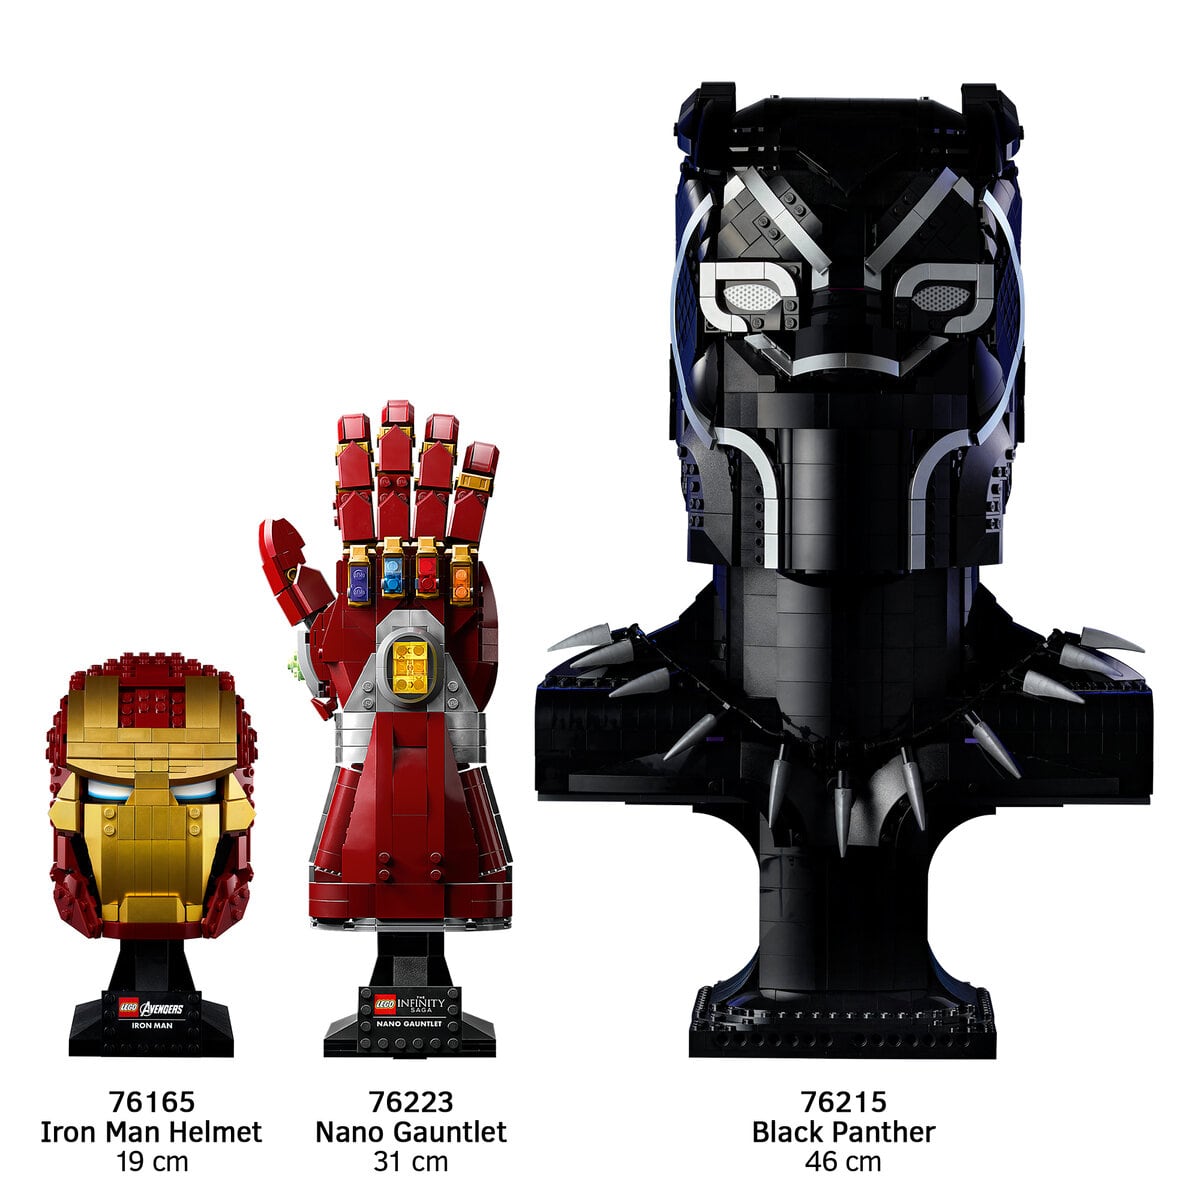 Review LEGO Marvel 76215 Black Panther - HelloBricks